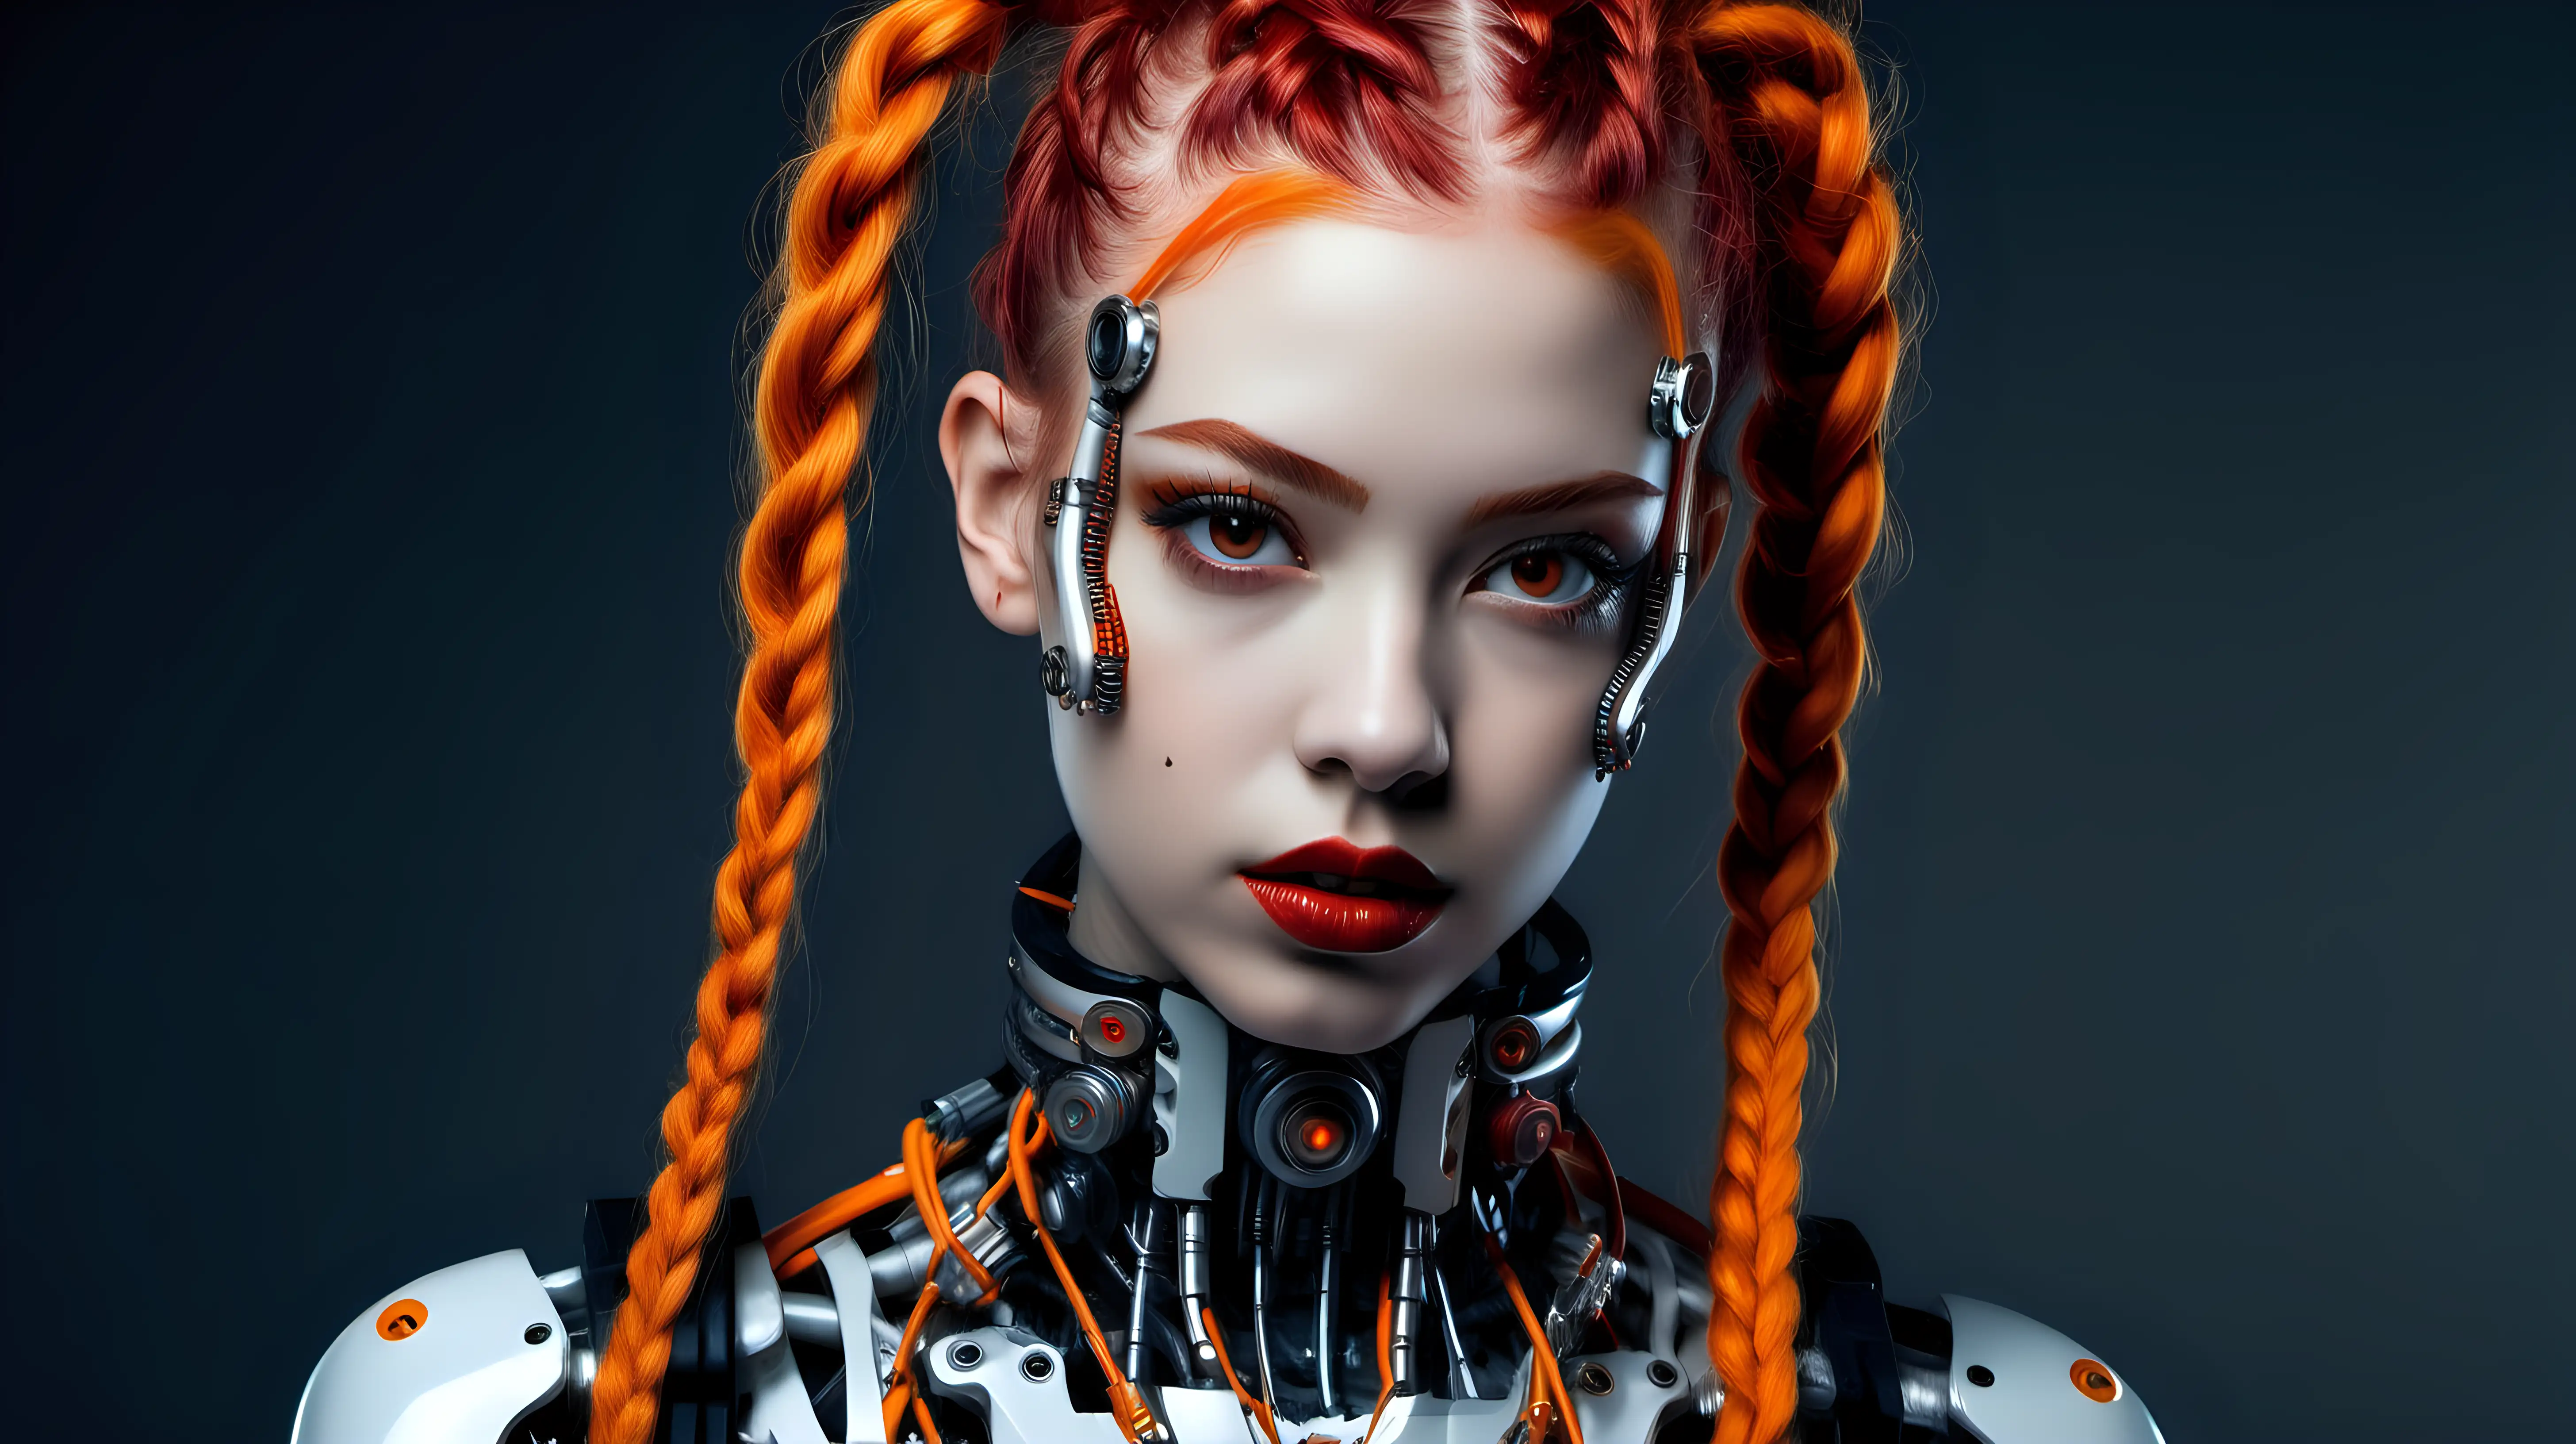 Gorgeous 18YearOld Cyborg Woman with Striking Orange Braids and Wild Hair